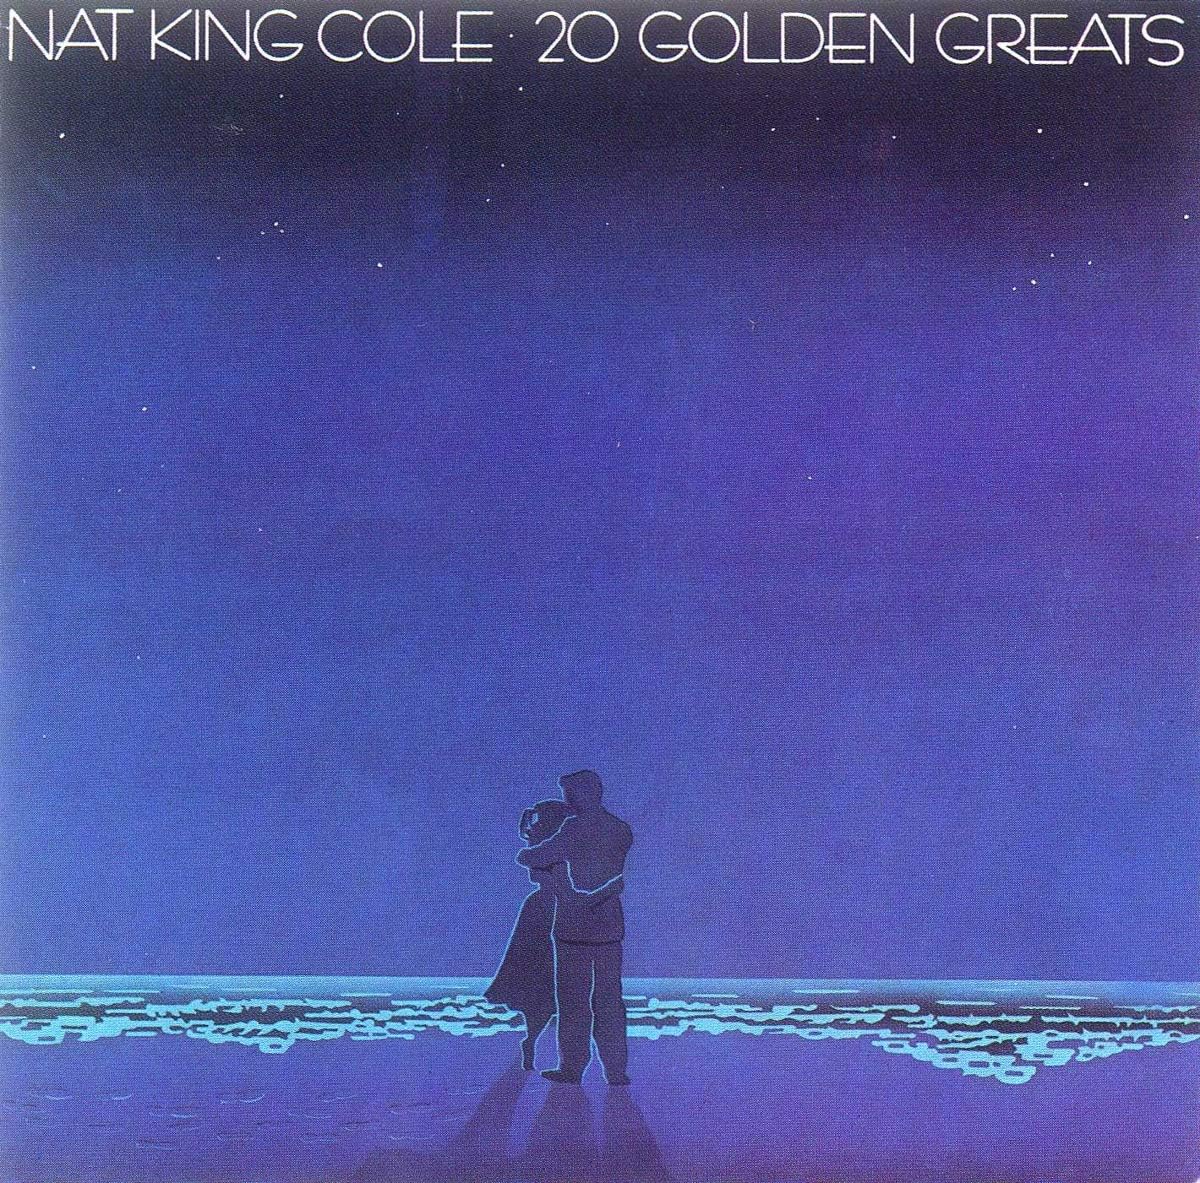 20 Golden Greats [Audio CD] Nat King Cole